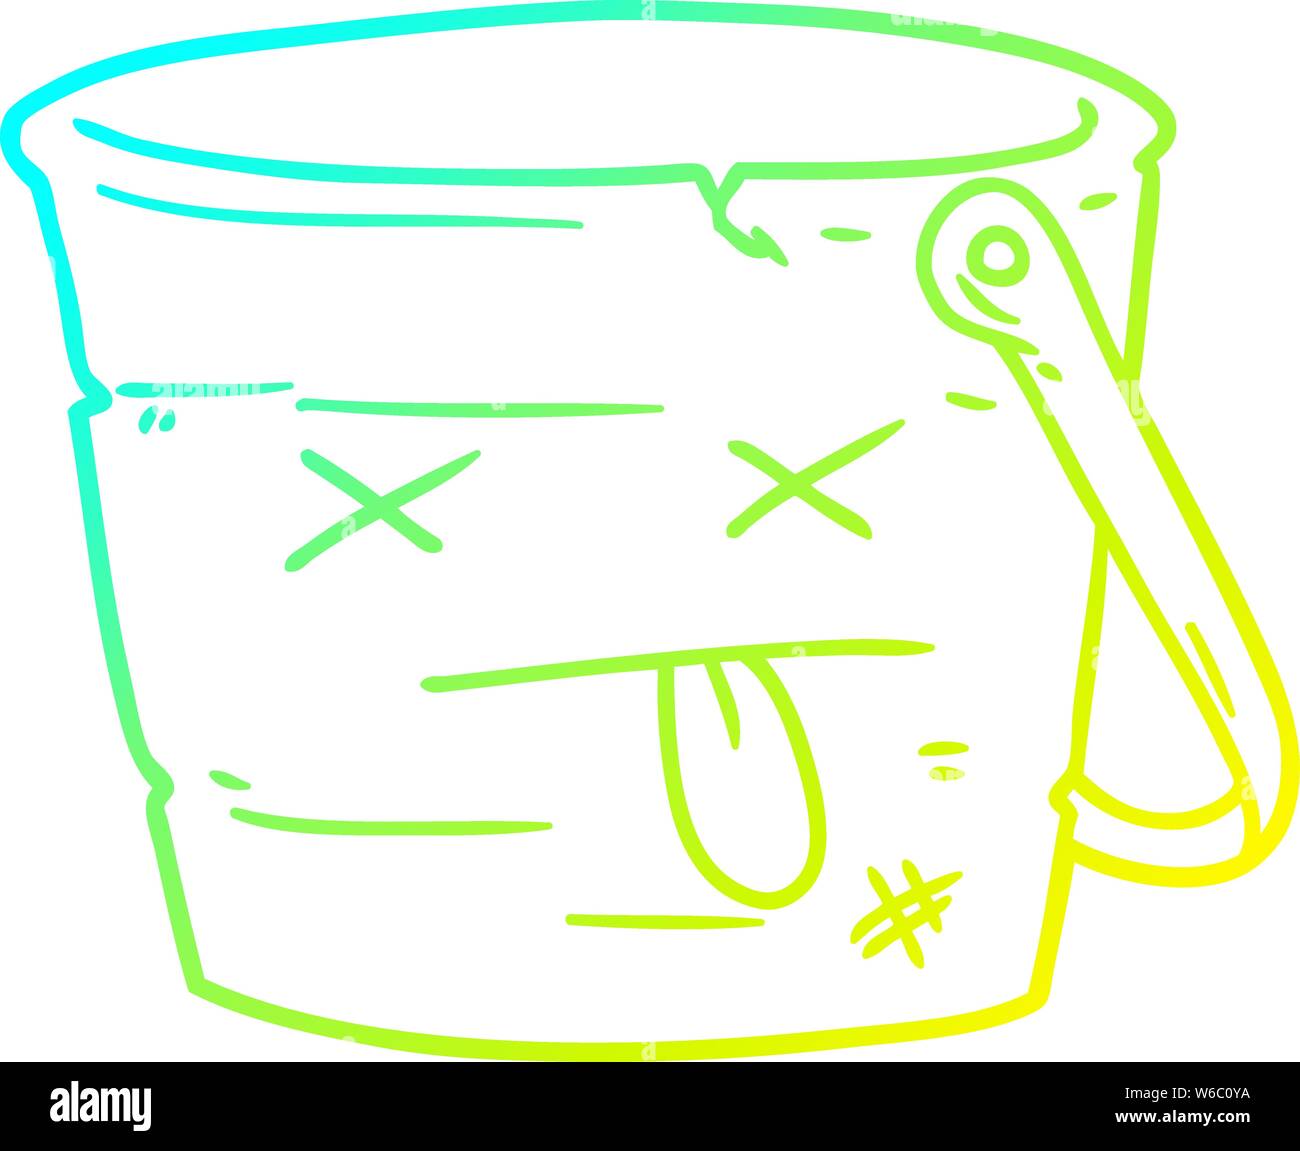 Illustration of Kick the Bucket Idiom Stock Illustration